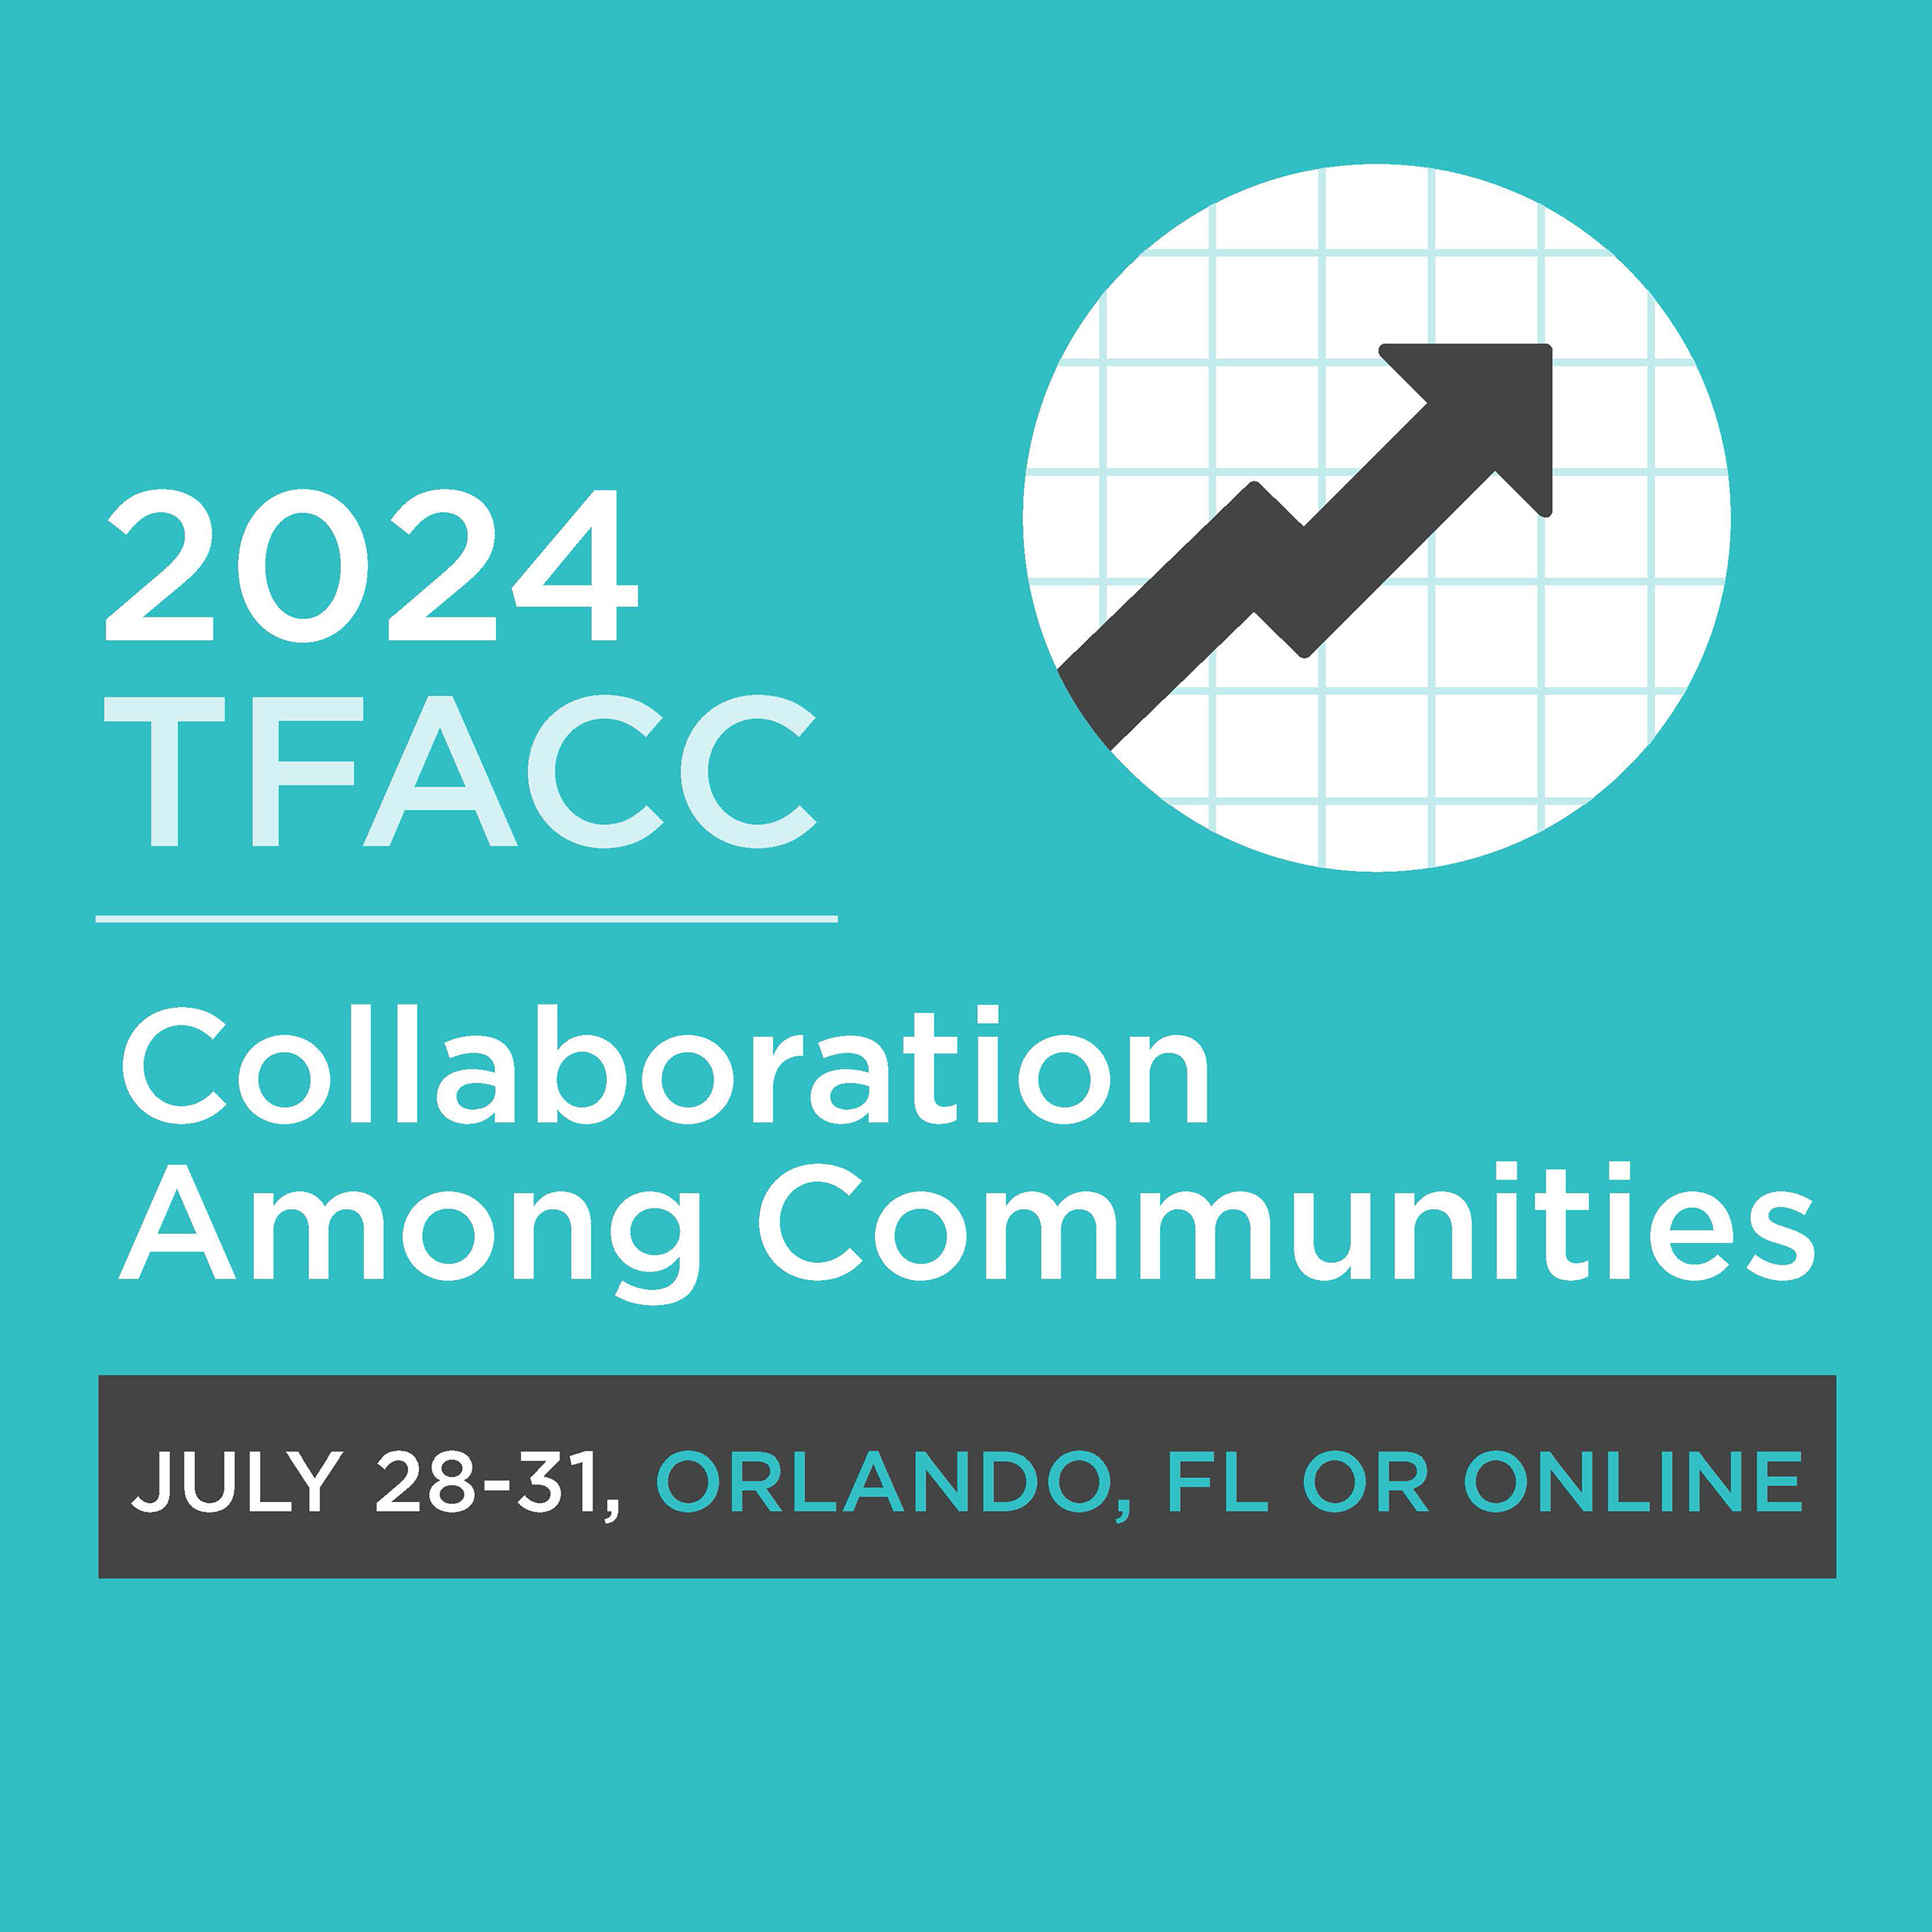 Register for 2024 TFACC, July 28-31 in Orlando, FL